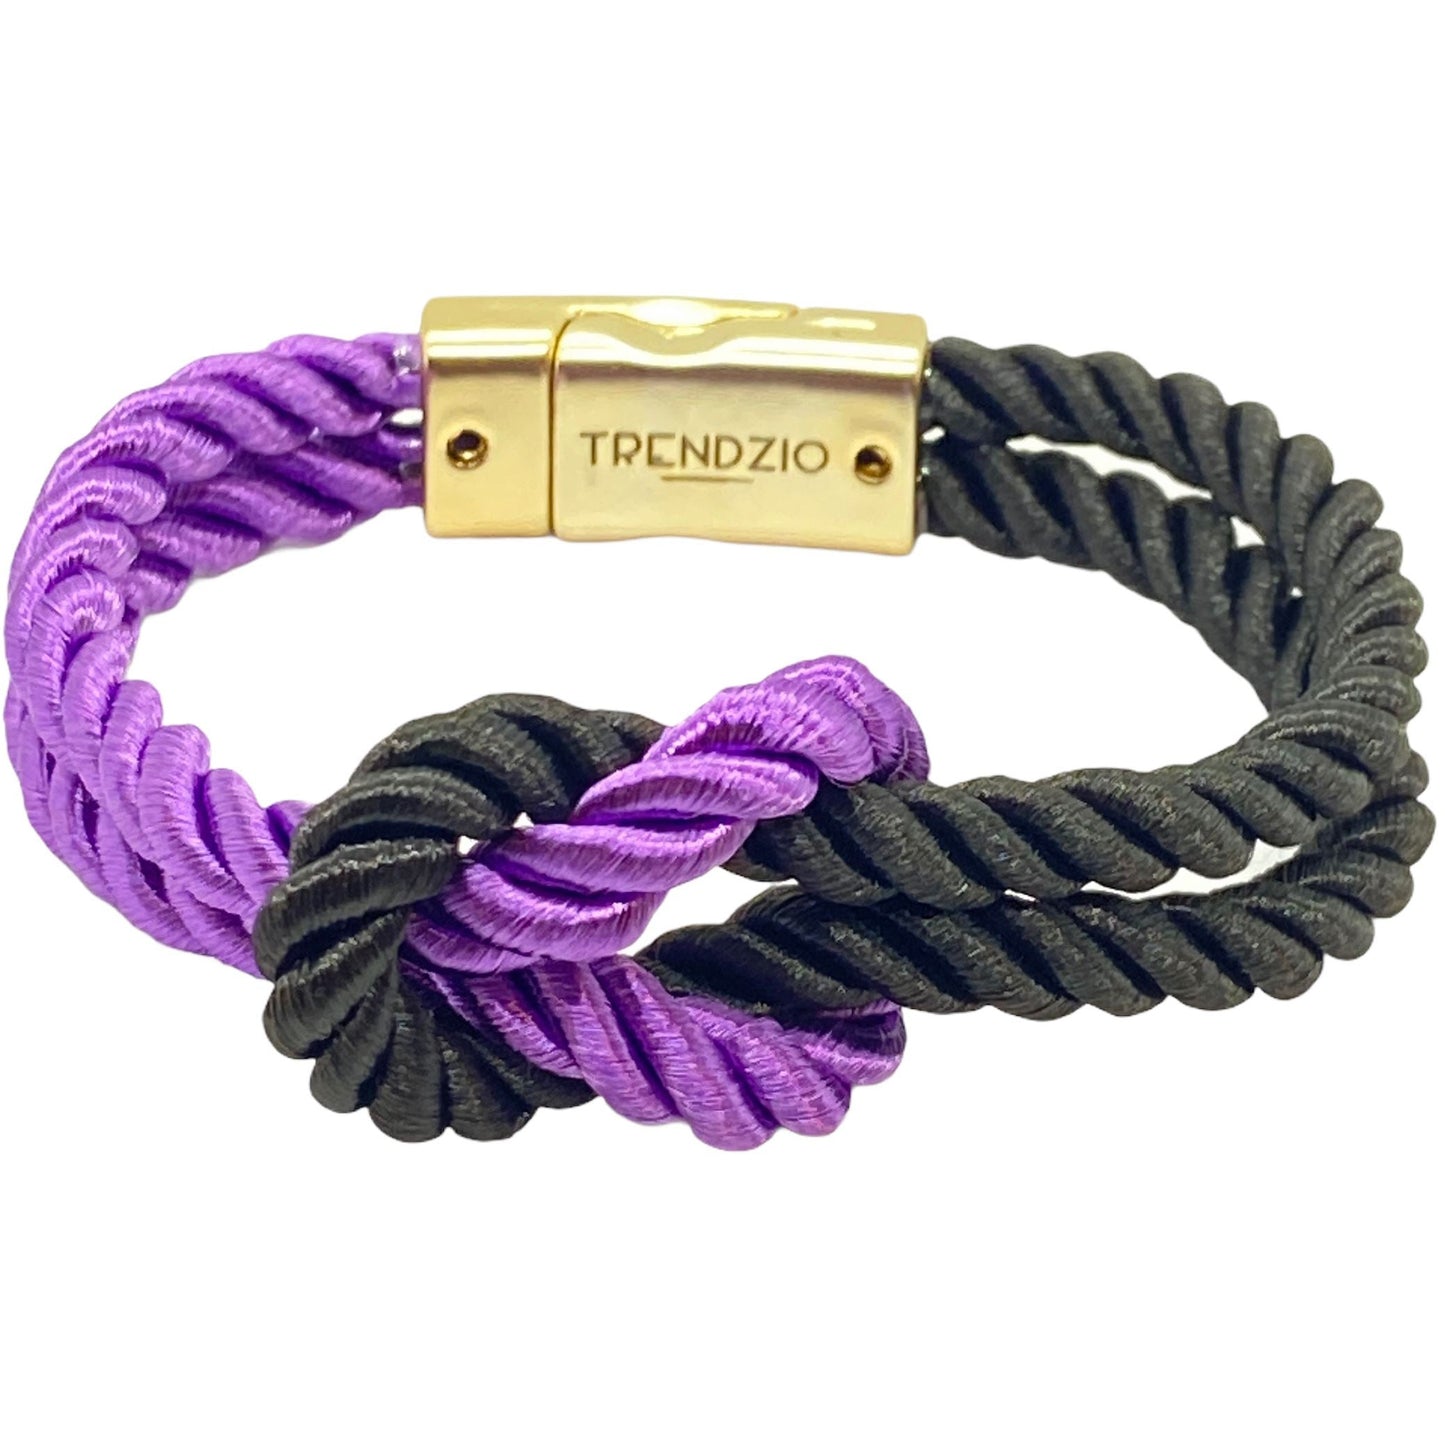 The Original Love Knot Satin Rope Bracelet- Black and Purple Bracelets Trendzio Black and Purple 